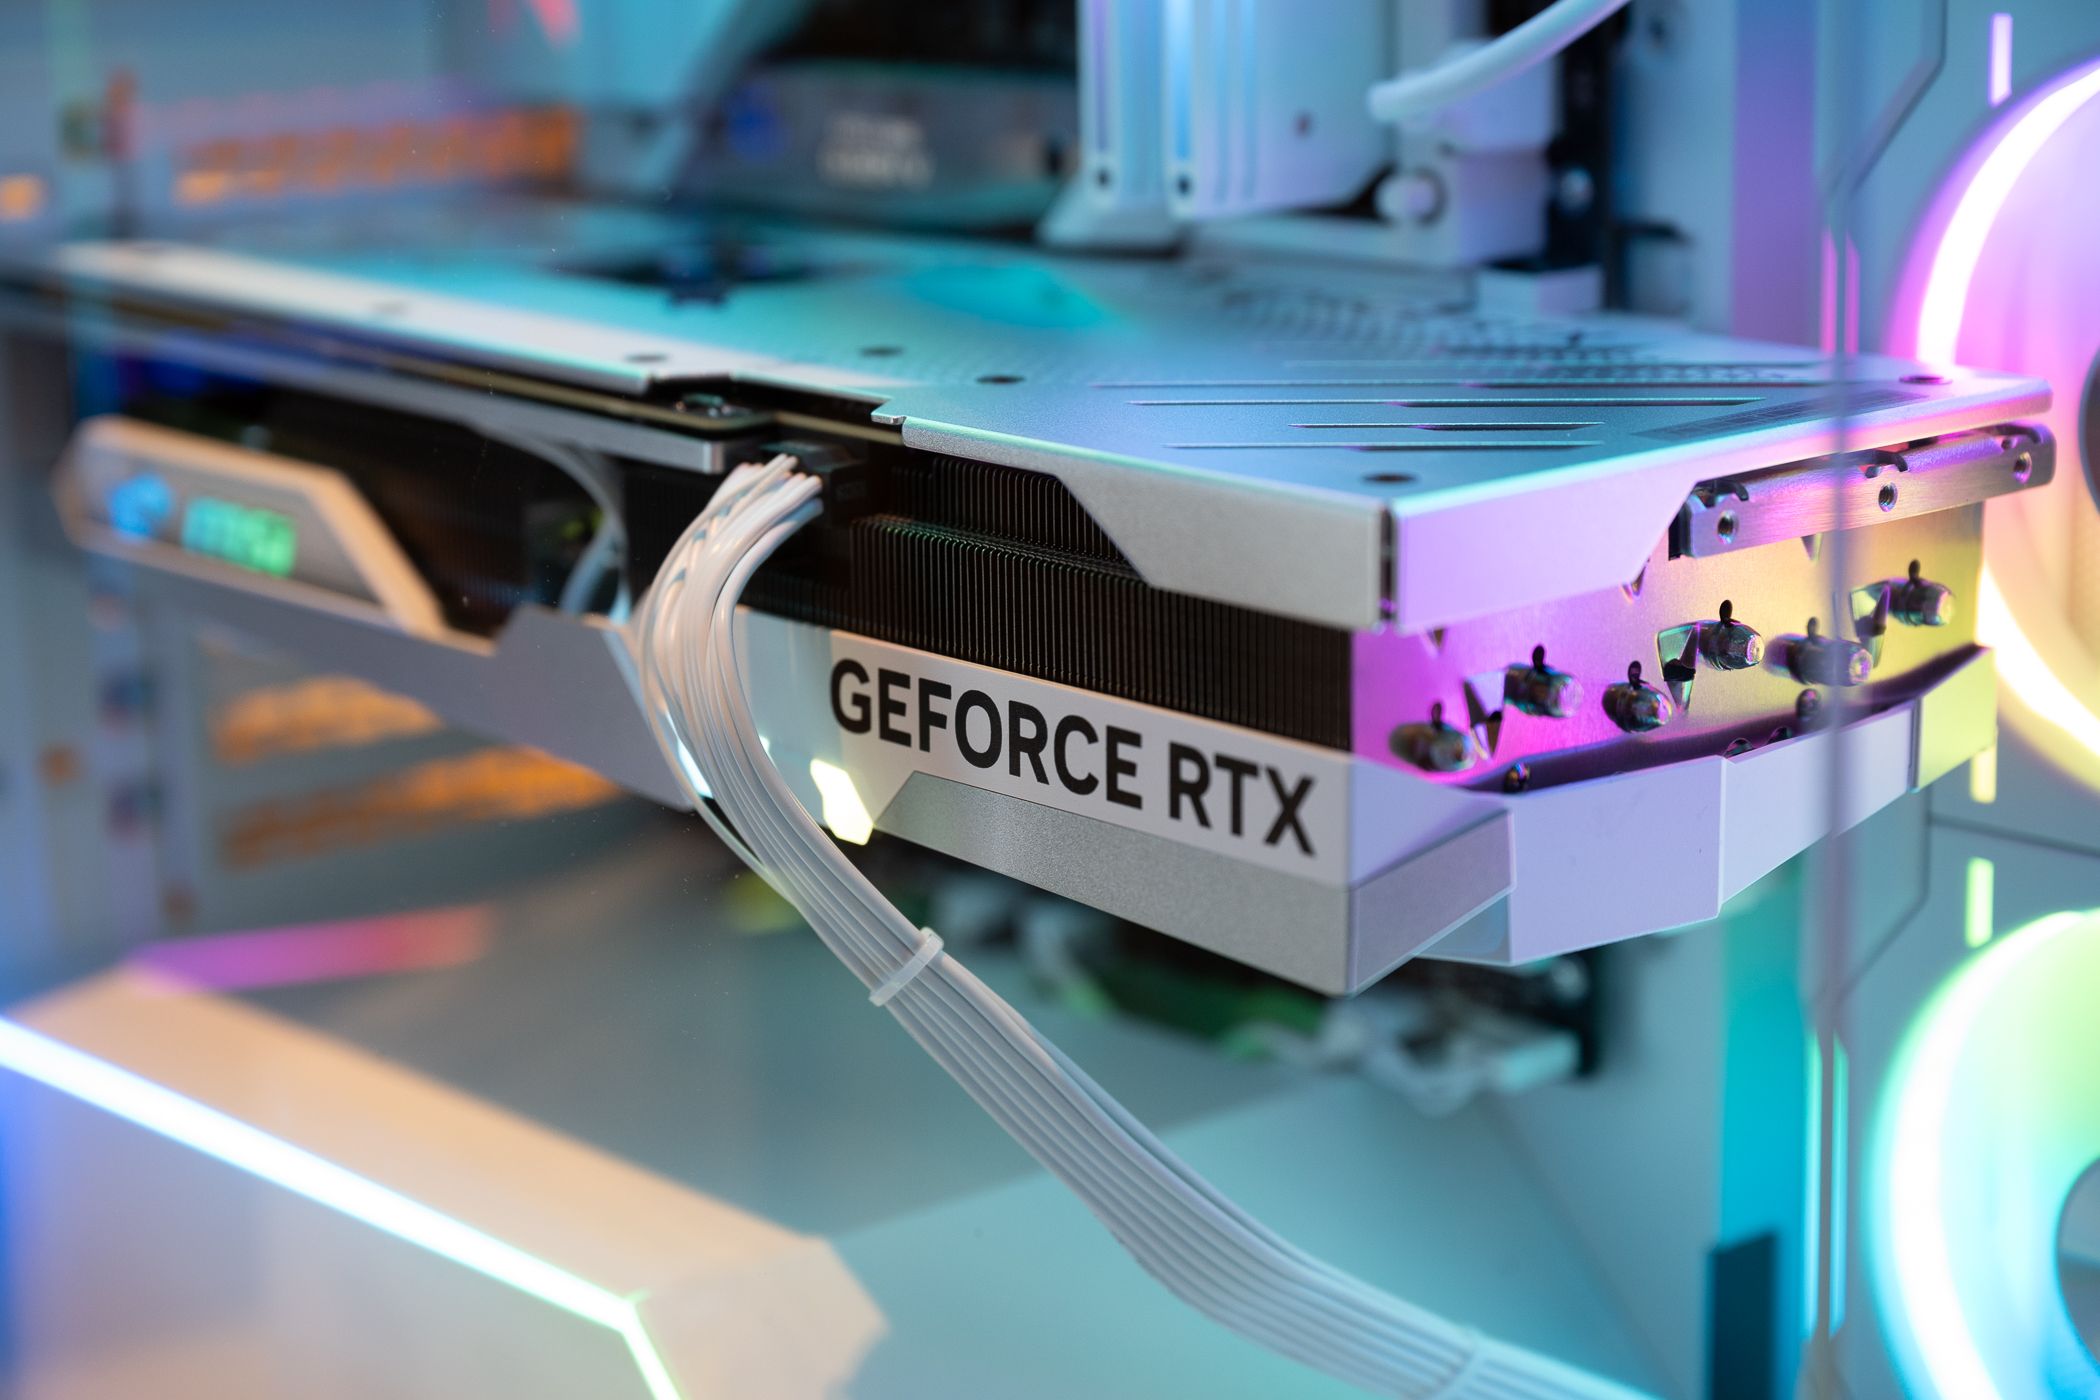 NVIDIA GeForce RTX GPU inside a gaming PC.